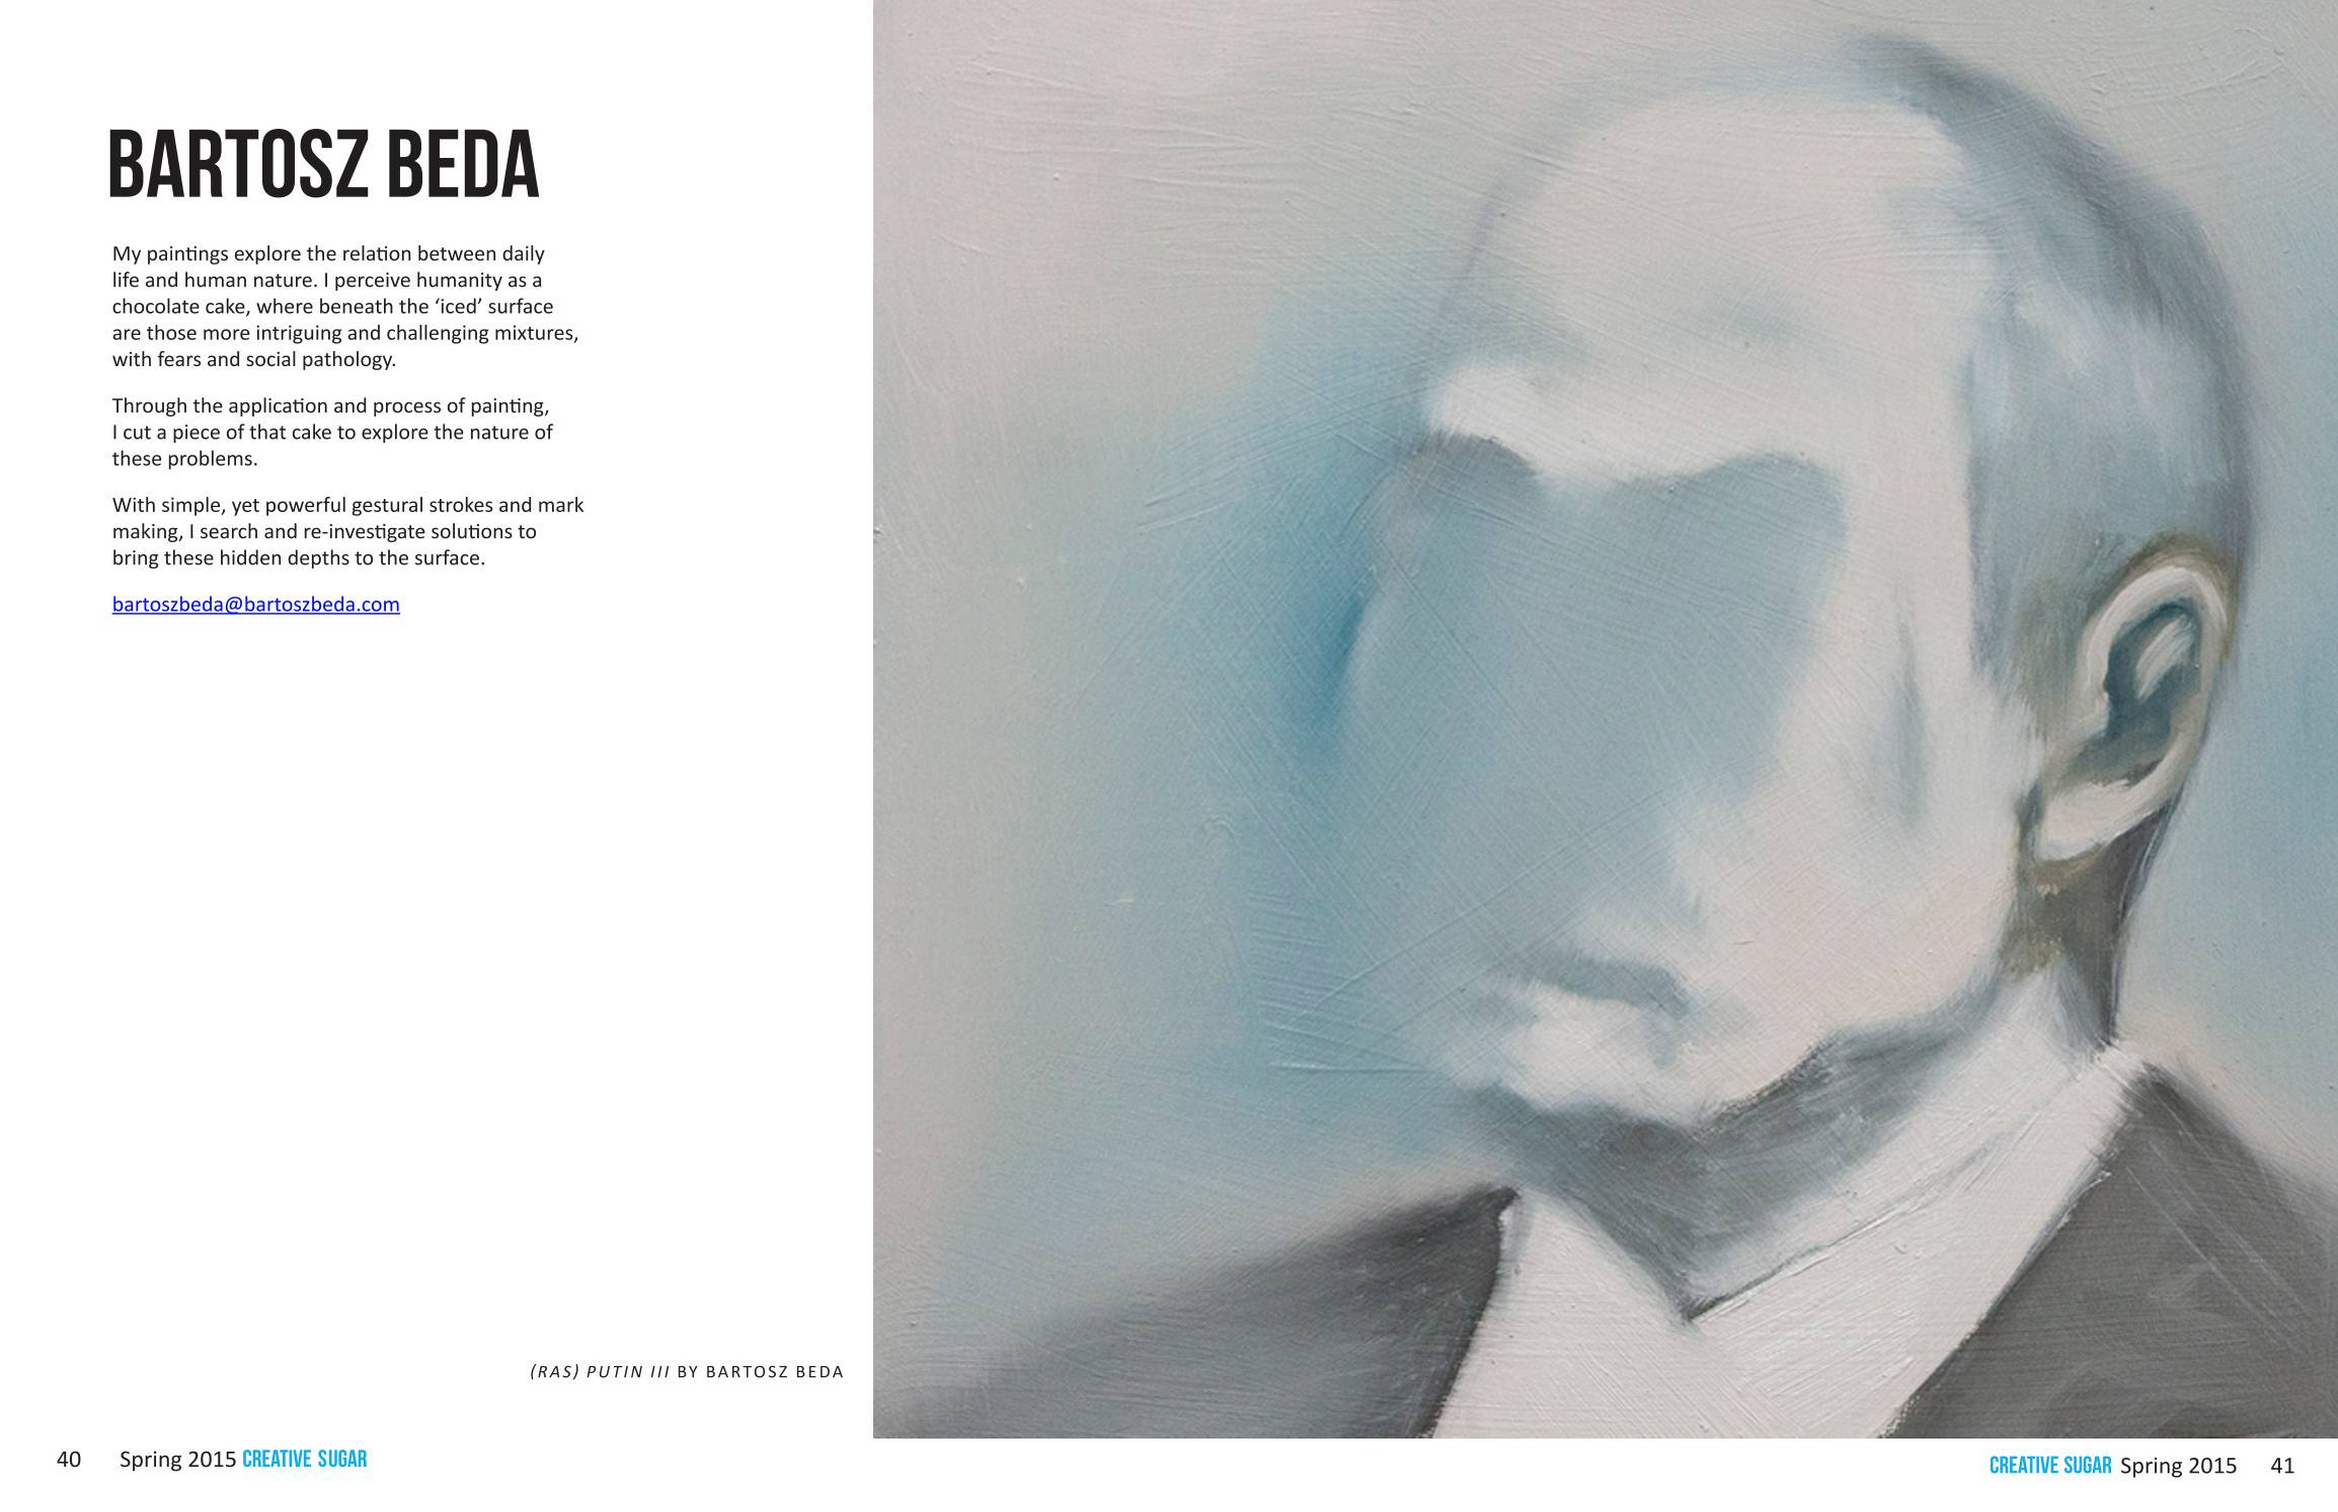 Creative Sugar Magazine featured Bartosz Beda